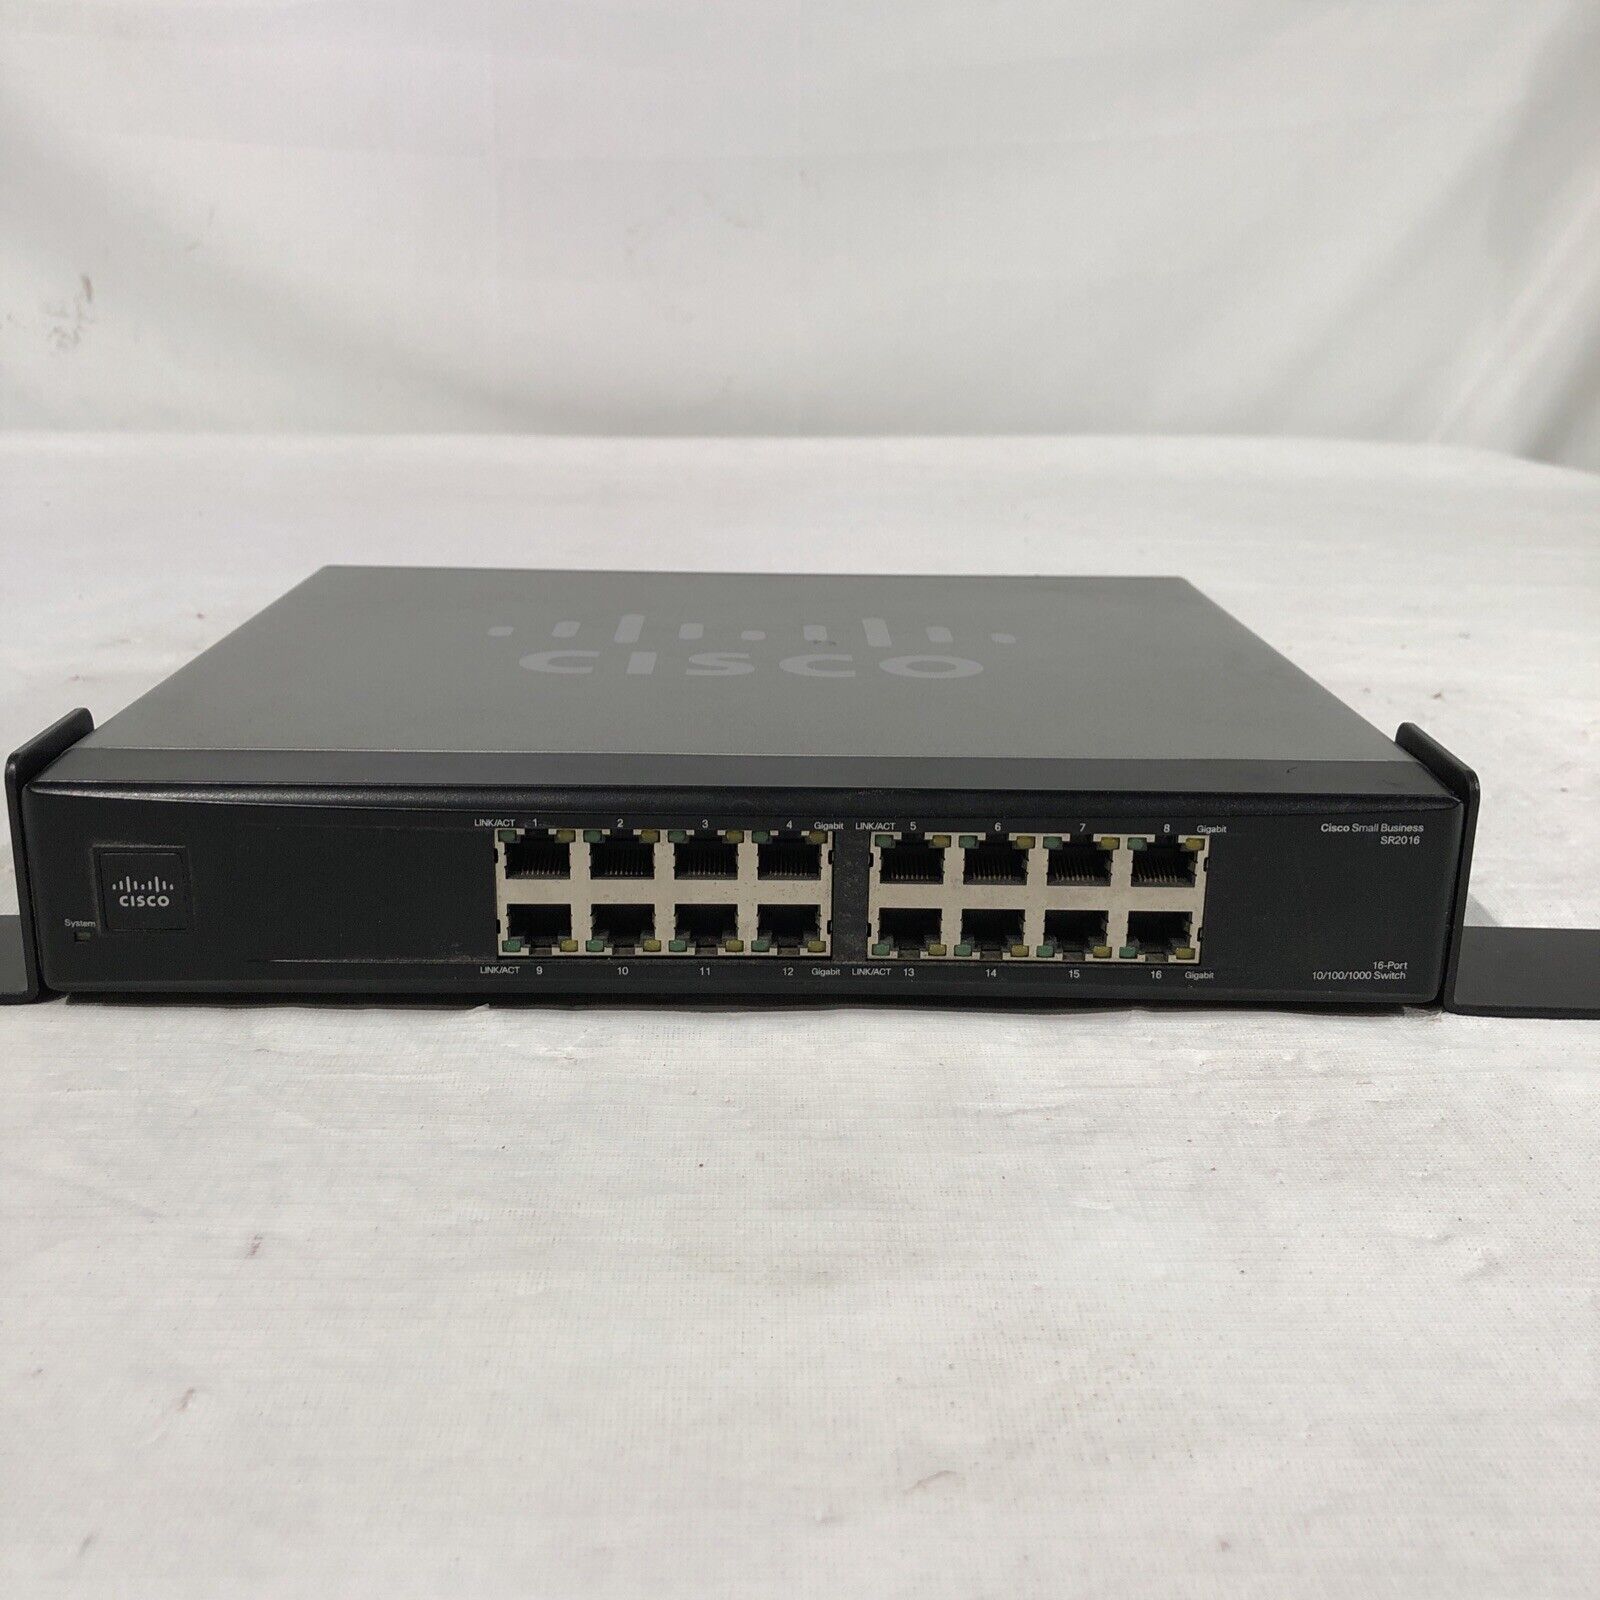 Cisco Small Business SR2016 v2.2 16-Port 10/100/1000 Gigabit Switch